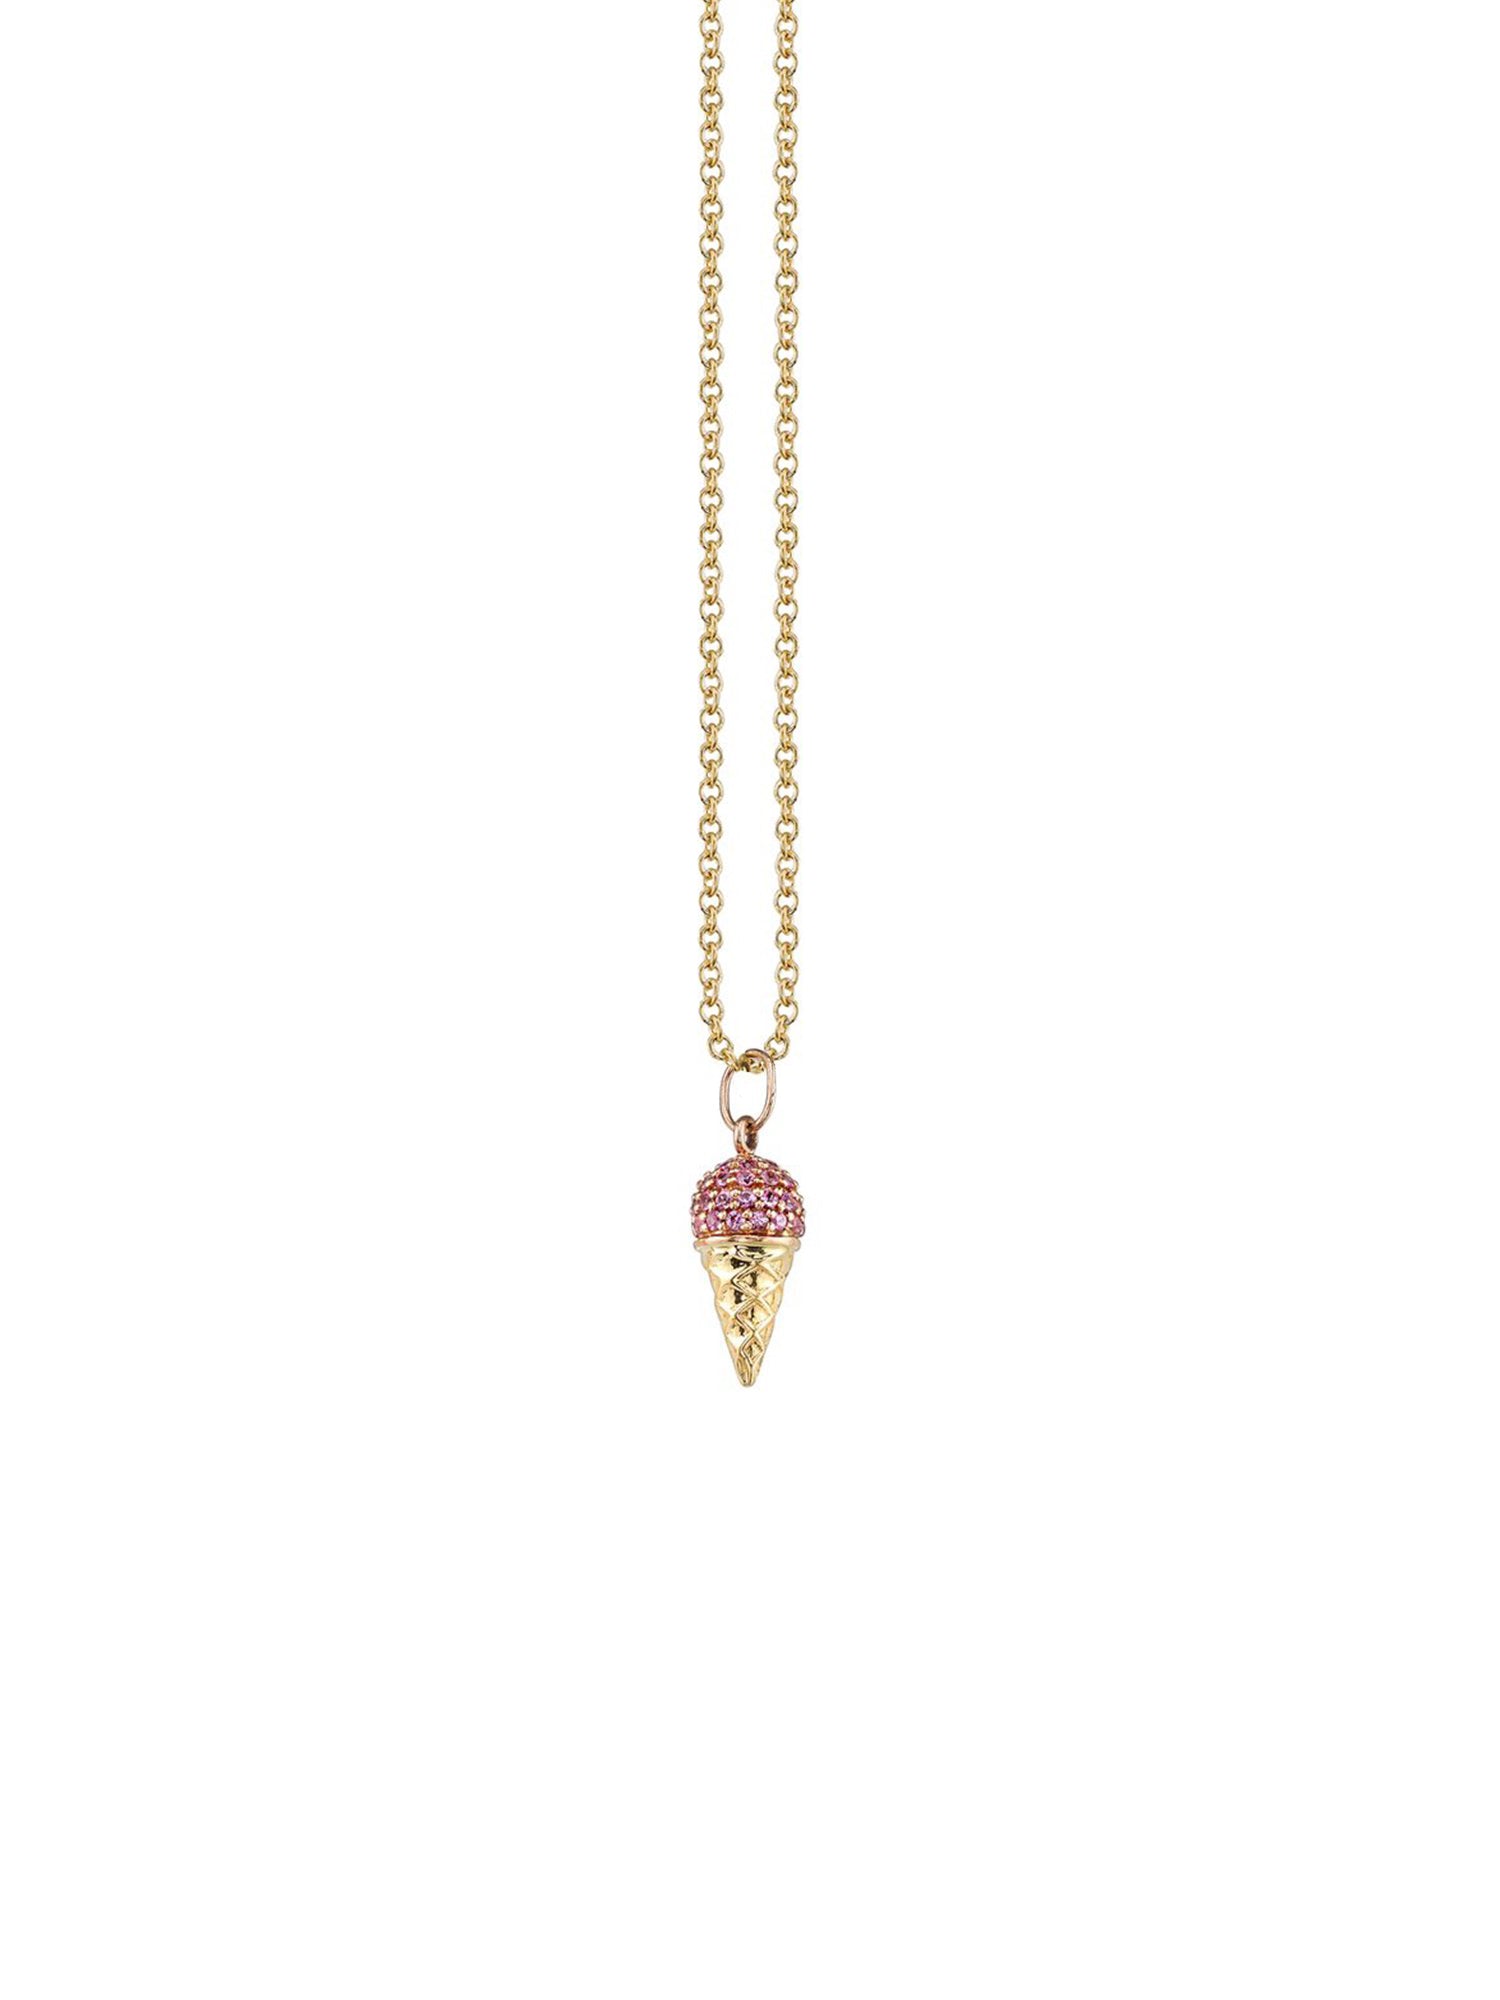 Sydney Evan Ice Cream 14k Gold Pink Sapphire Necklace | Hangar9